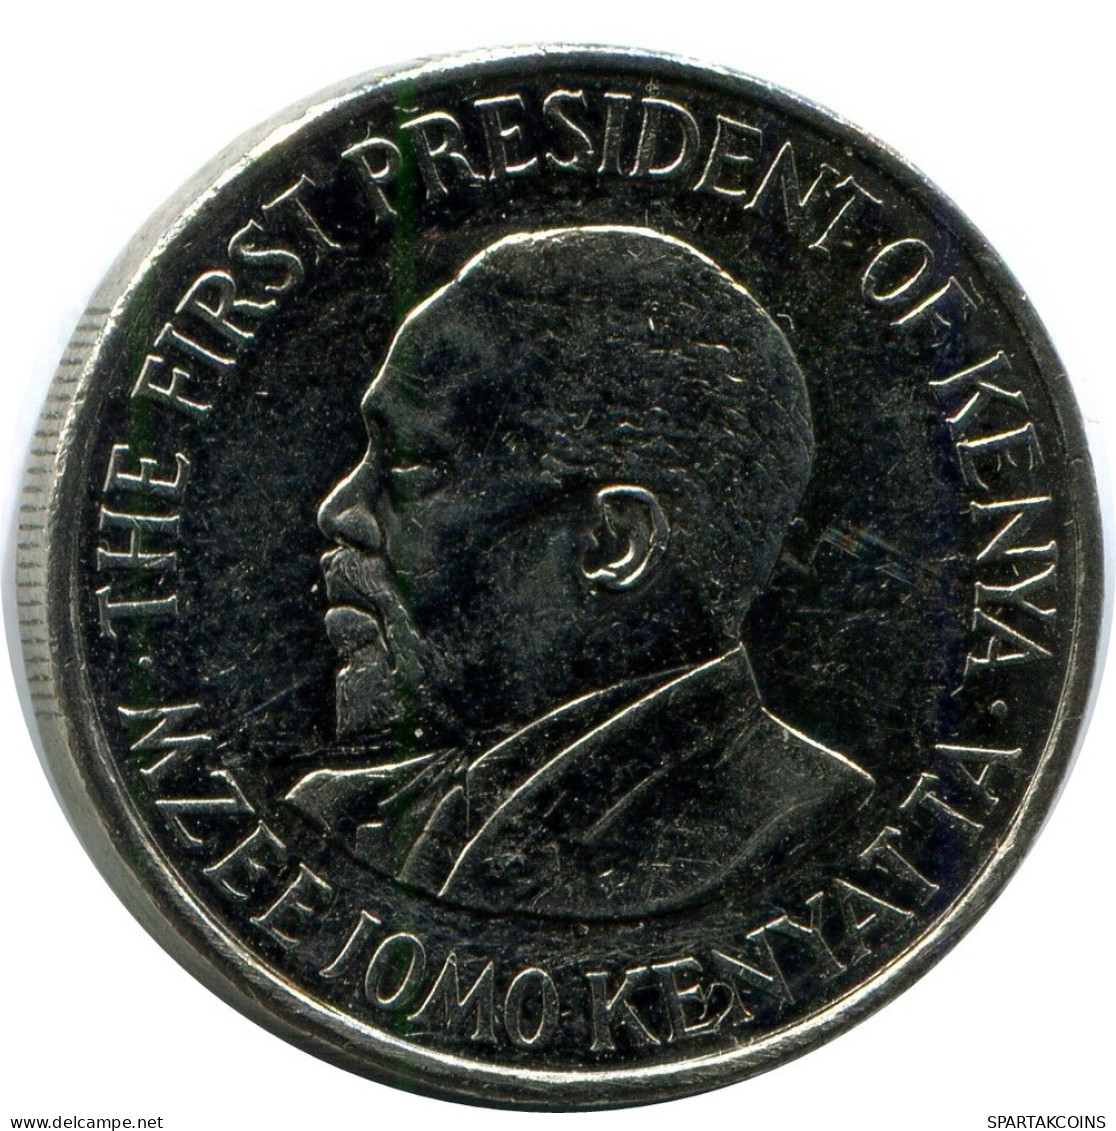 1 SHILLING 2005 KENYA Coin #AP896.U.A - Kenia